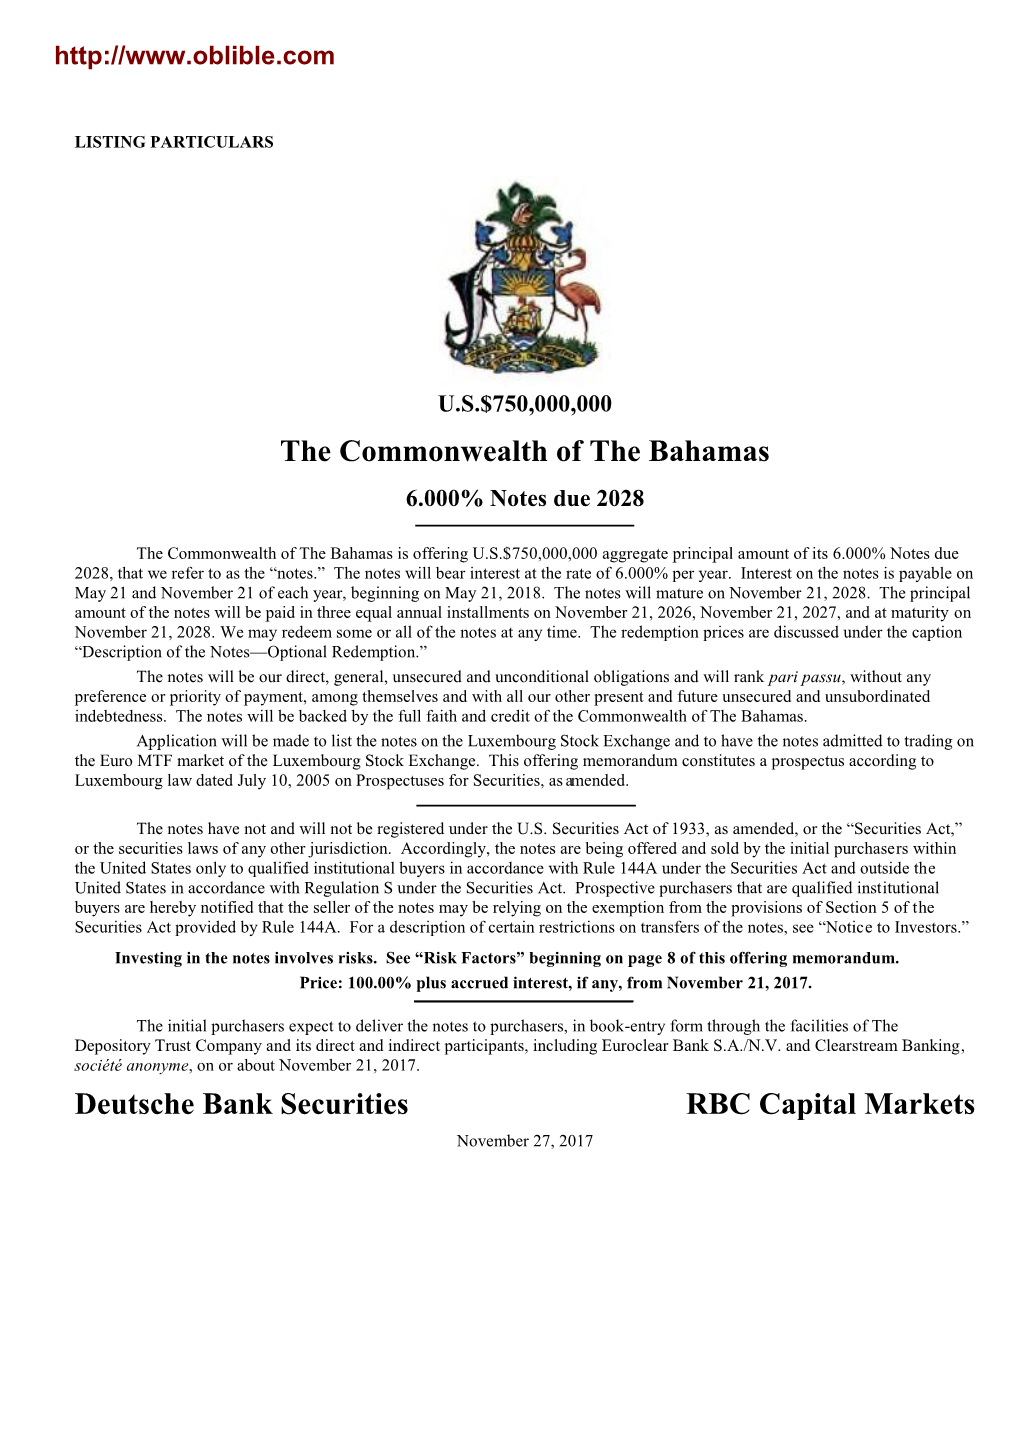 The Commonwealth of the Bahamas Deutsche Bank Securities RBC Capital Markets